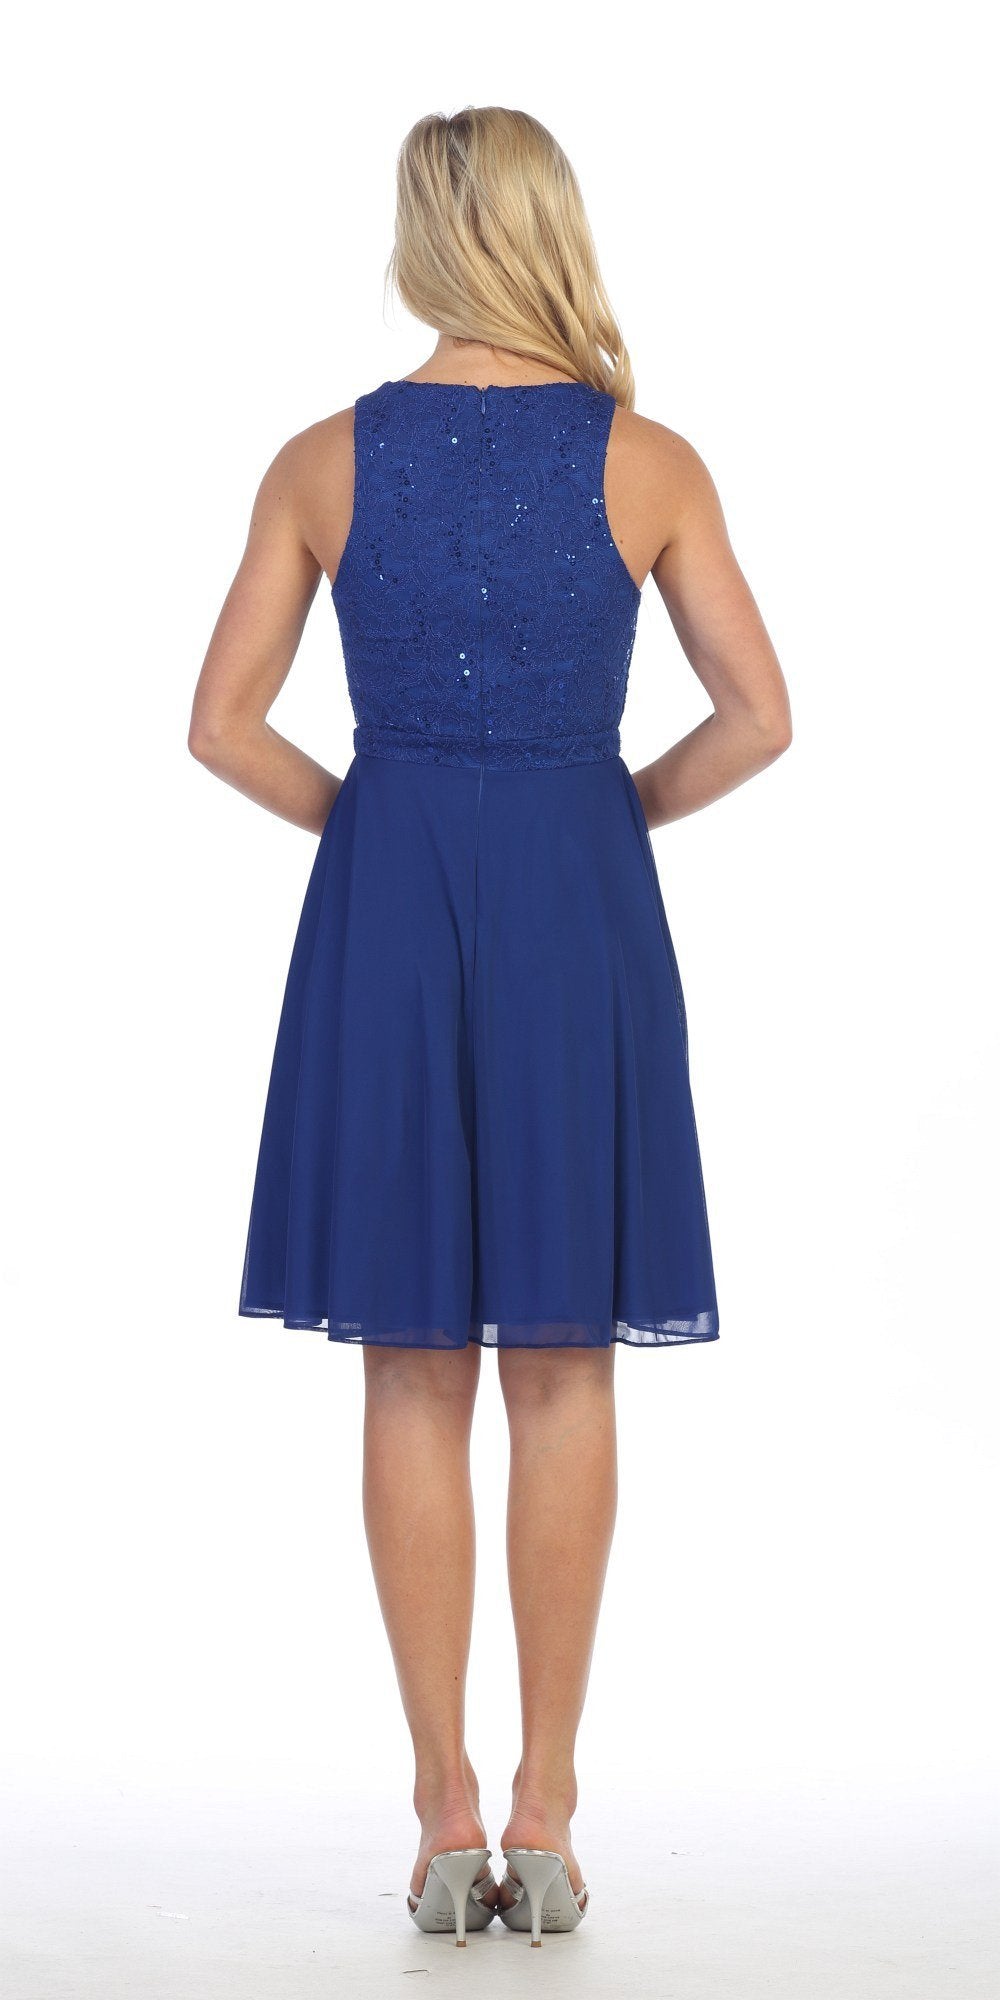 Celavie 6253 Scoop Neck Lace Dress Royal Blue